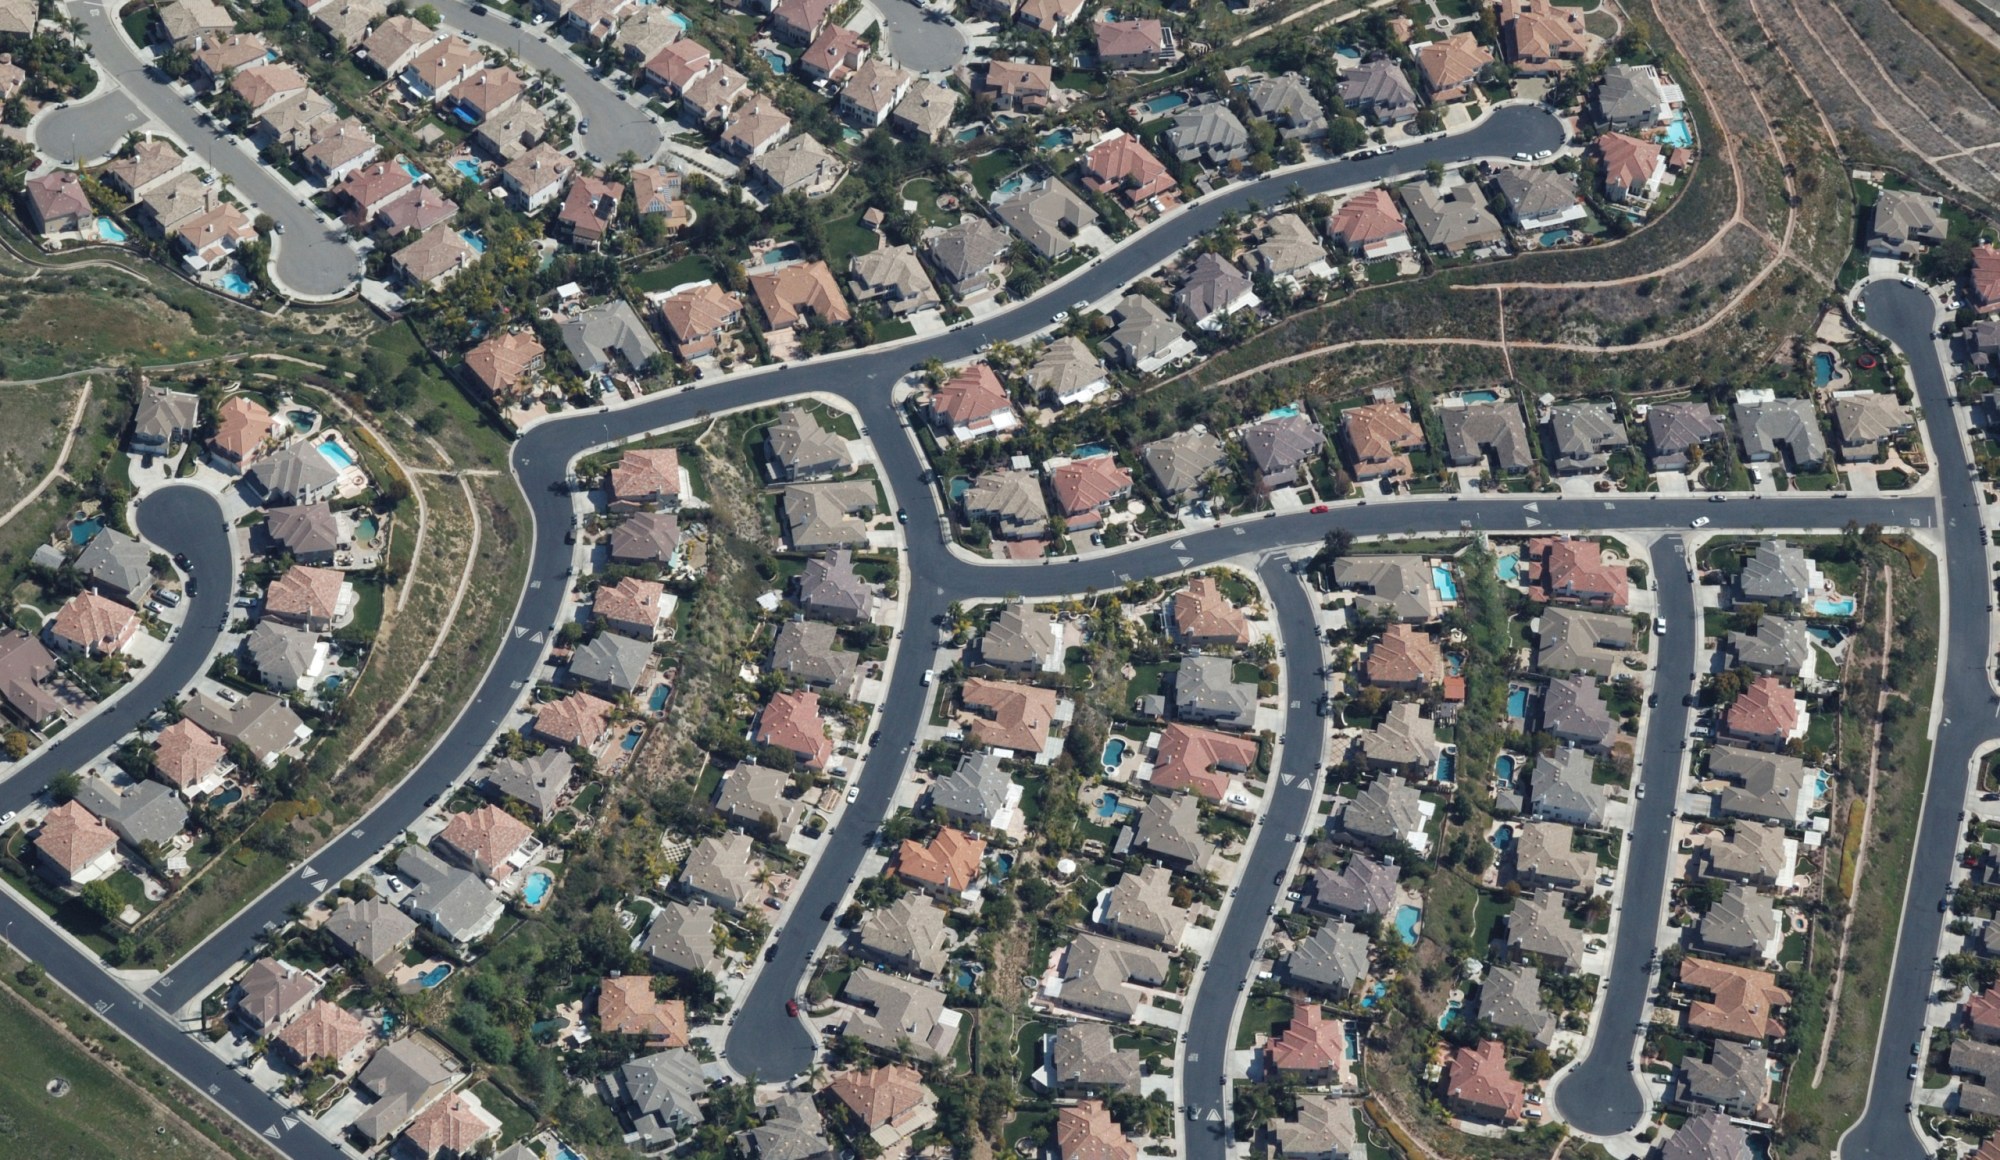 A housing development in Orange County, California. (iStockphoto)